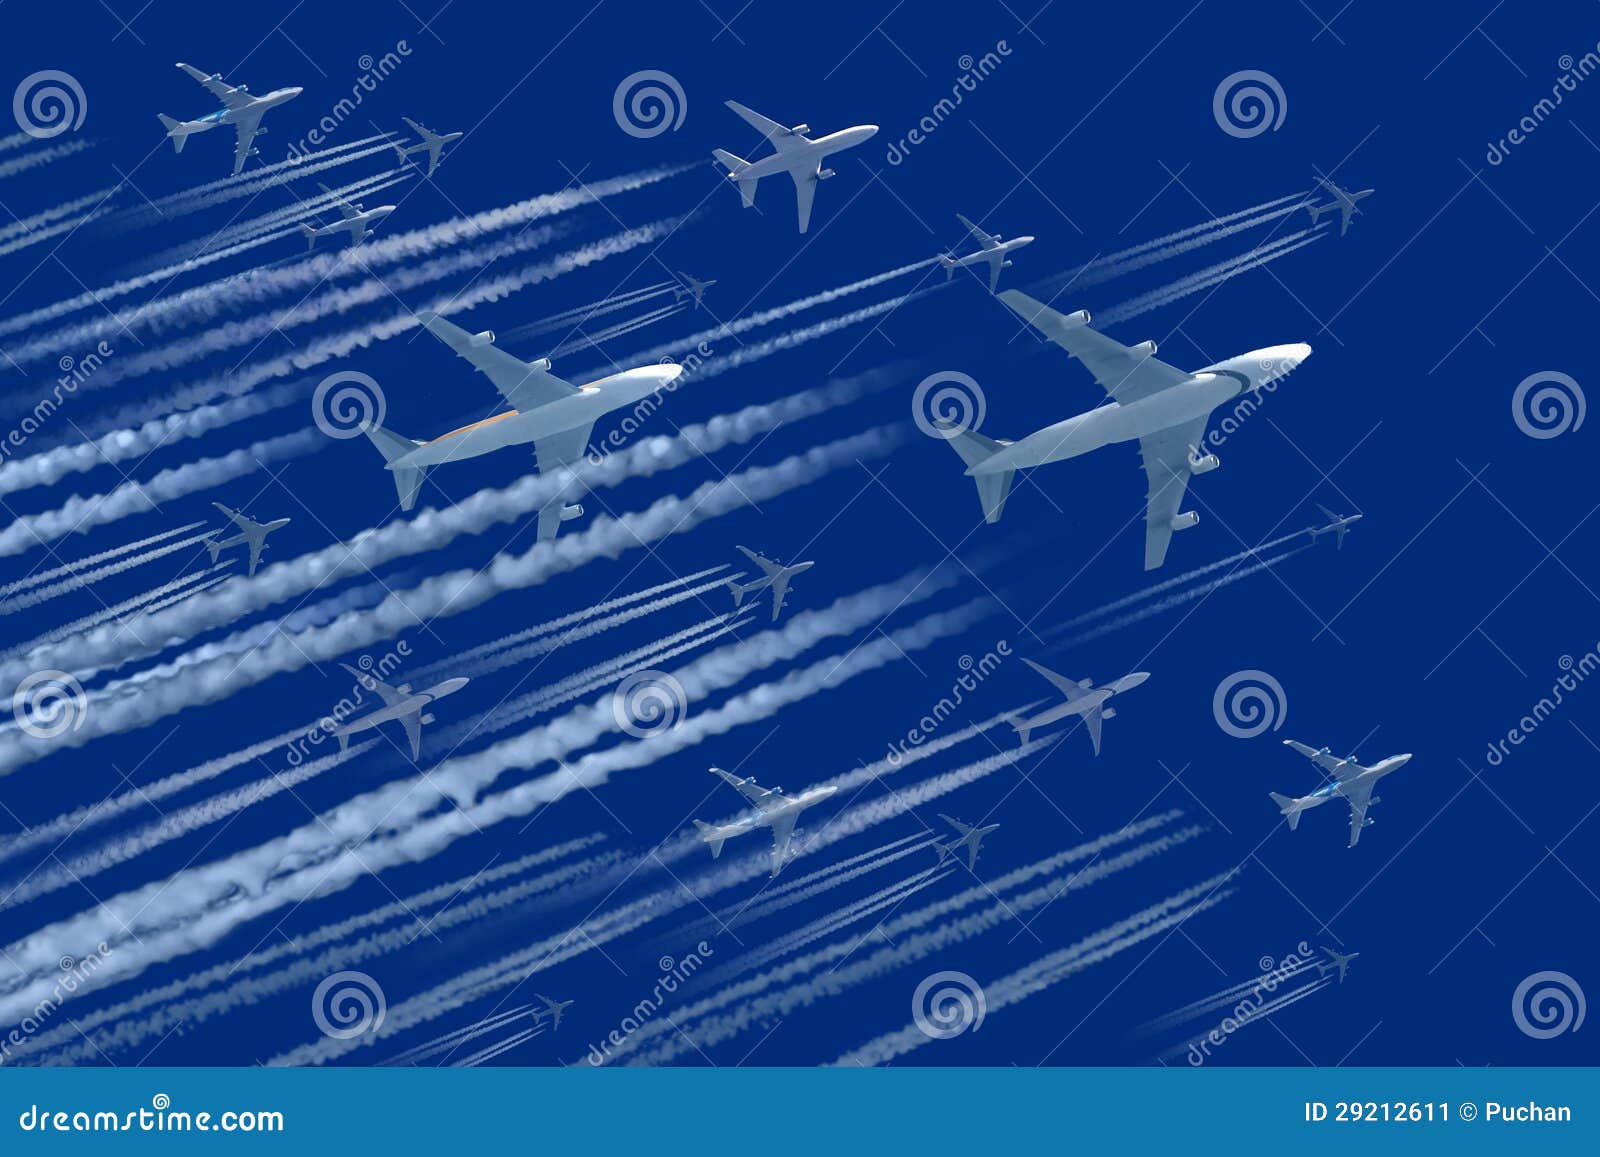 planes on blue sky